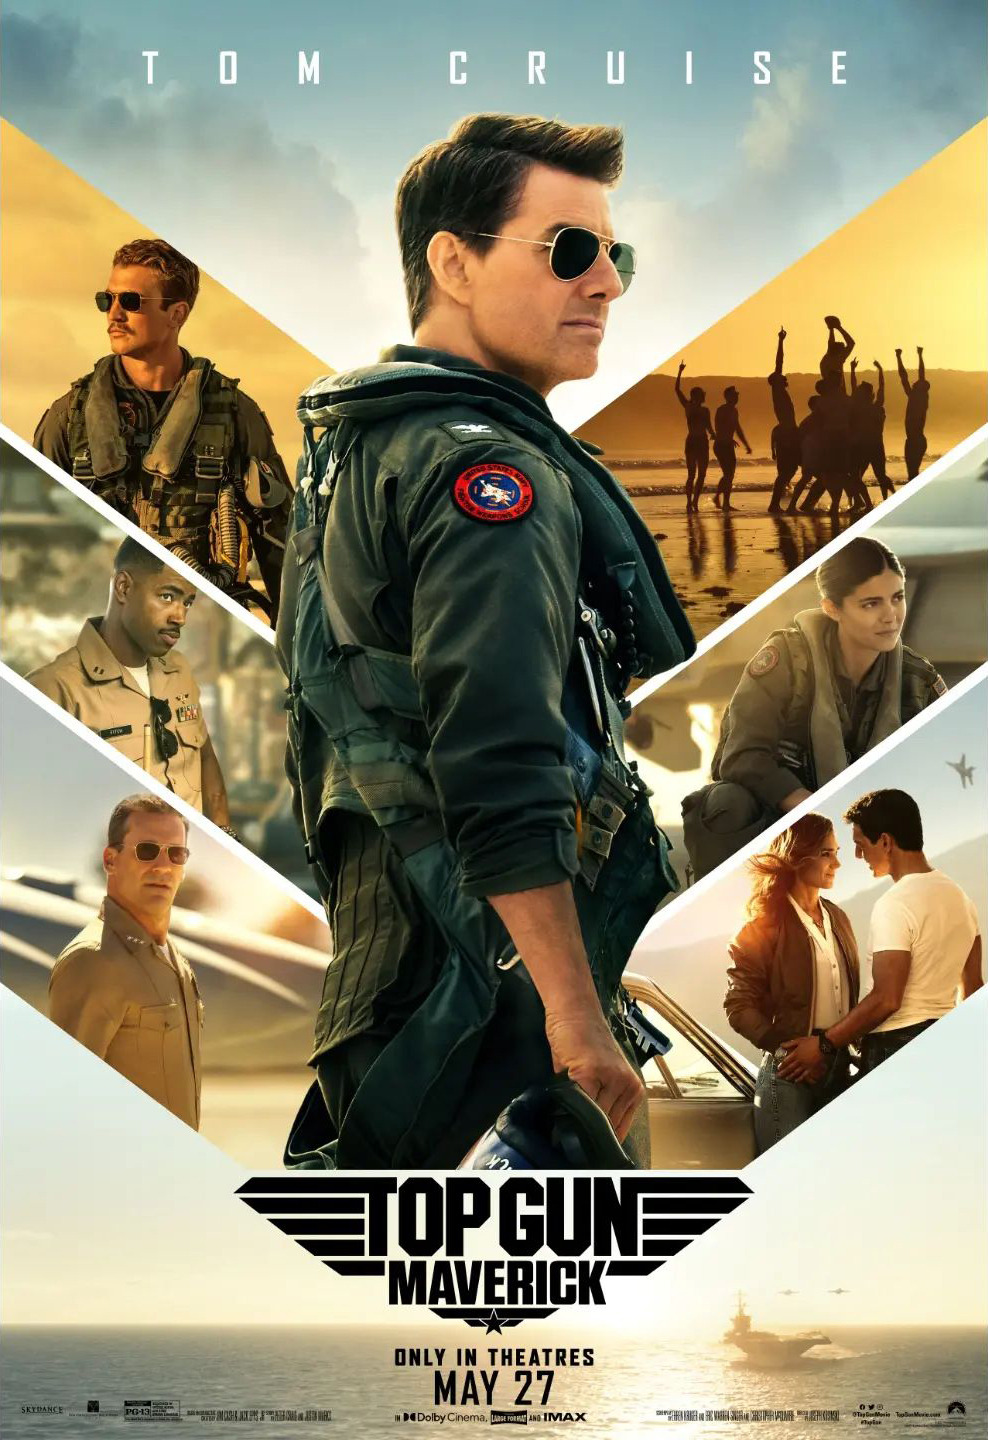 Image "Top Gun: Maverick" movie poster